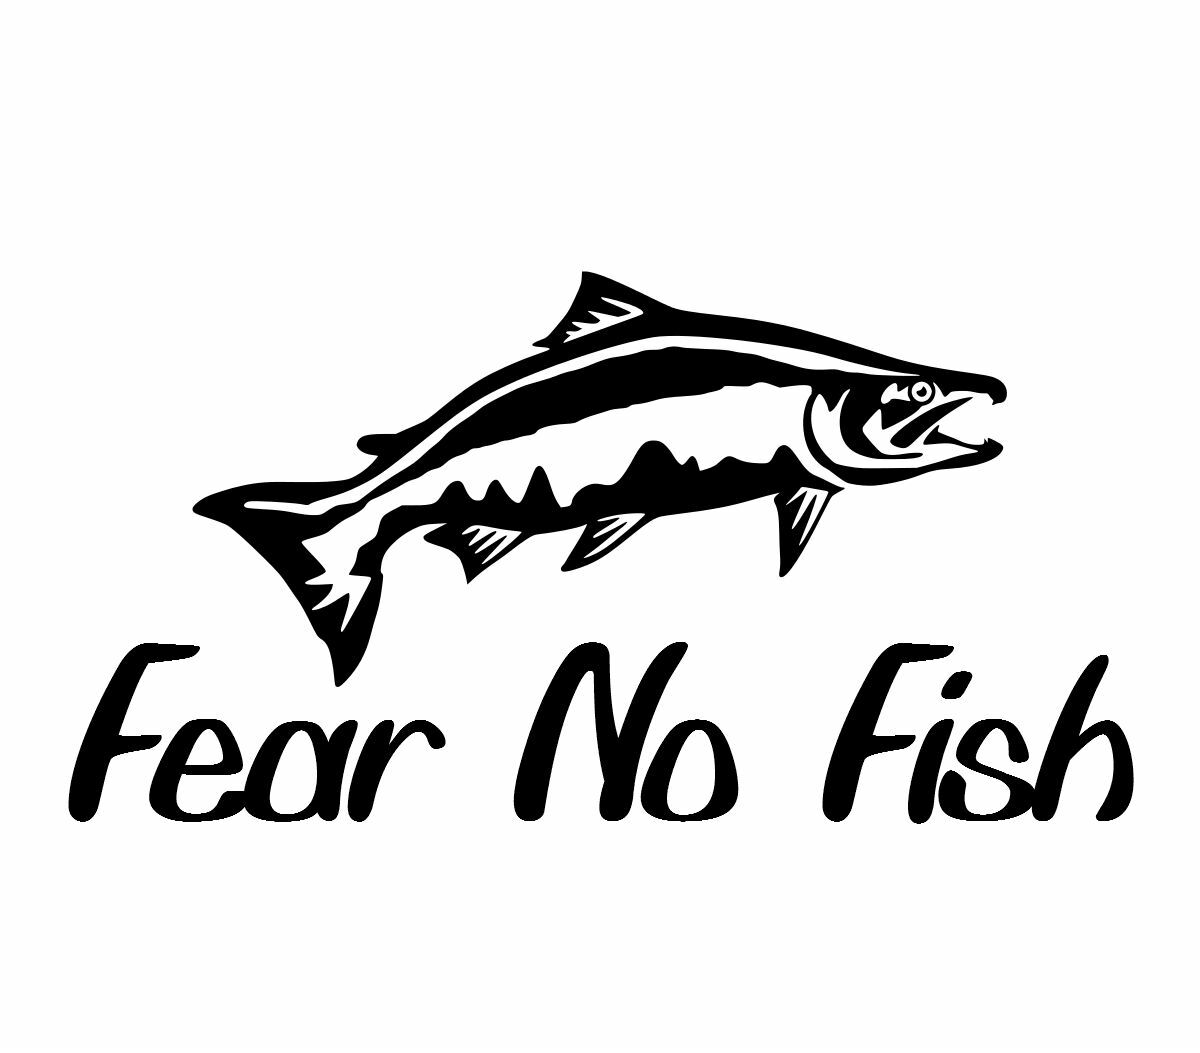 Fear no fish salmon vinyl decal fish car truck boat bumper window